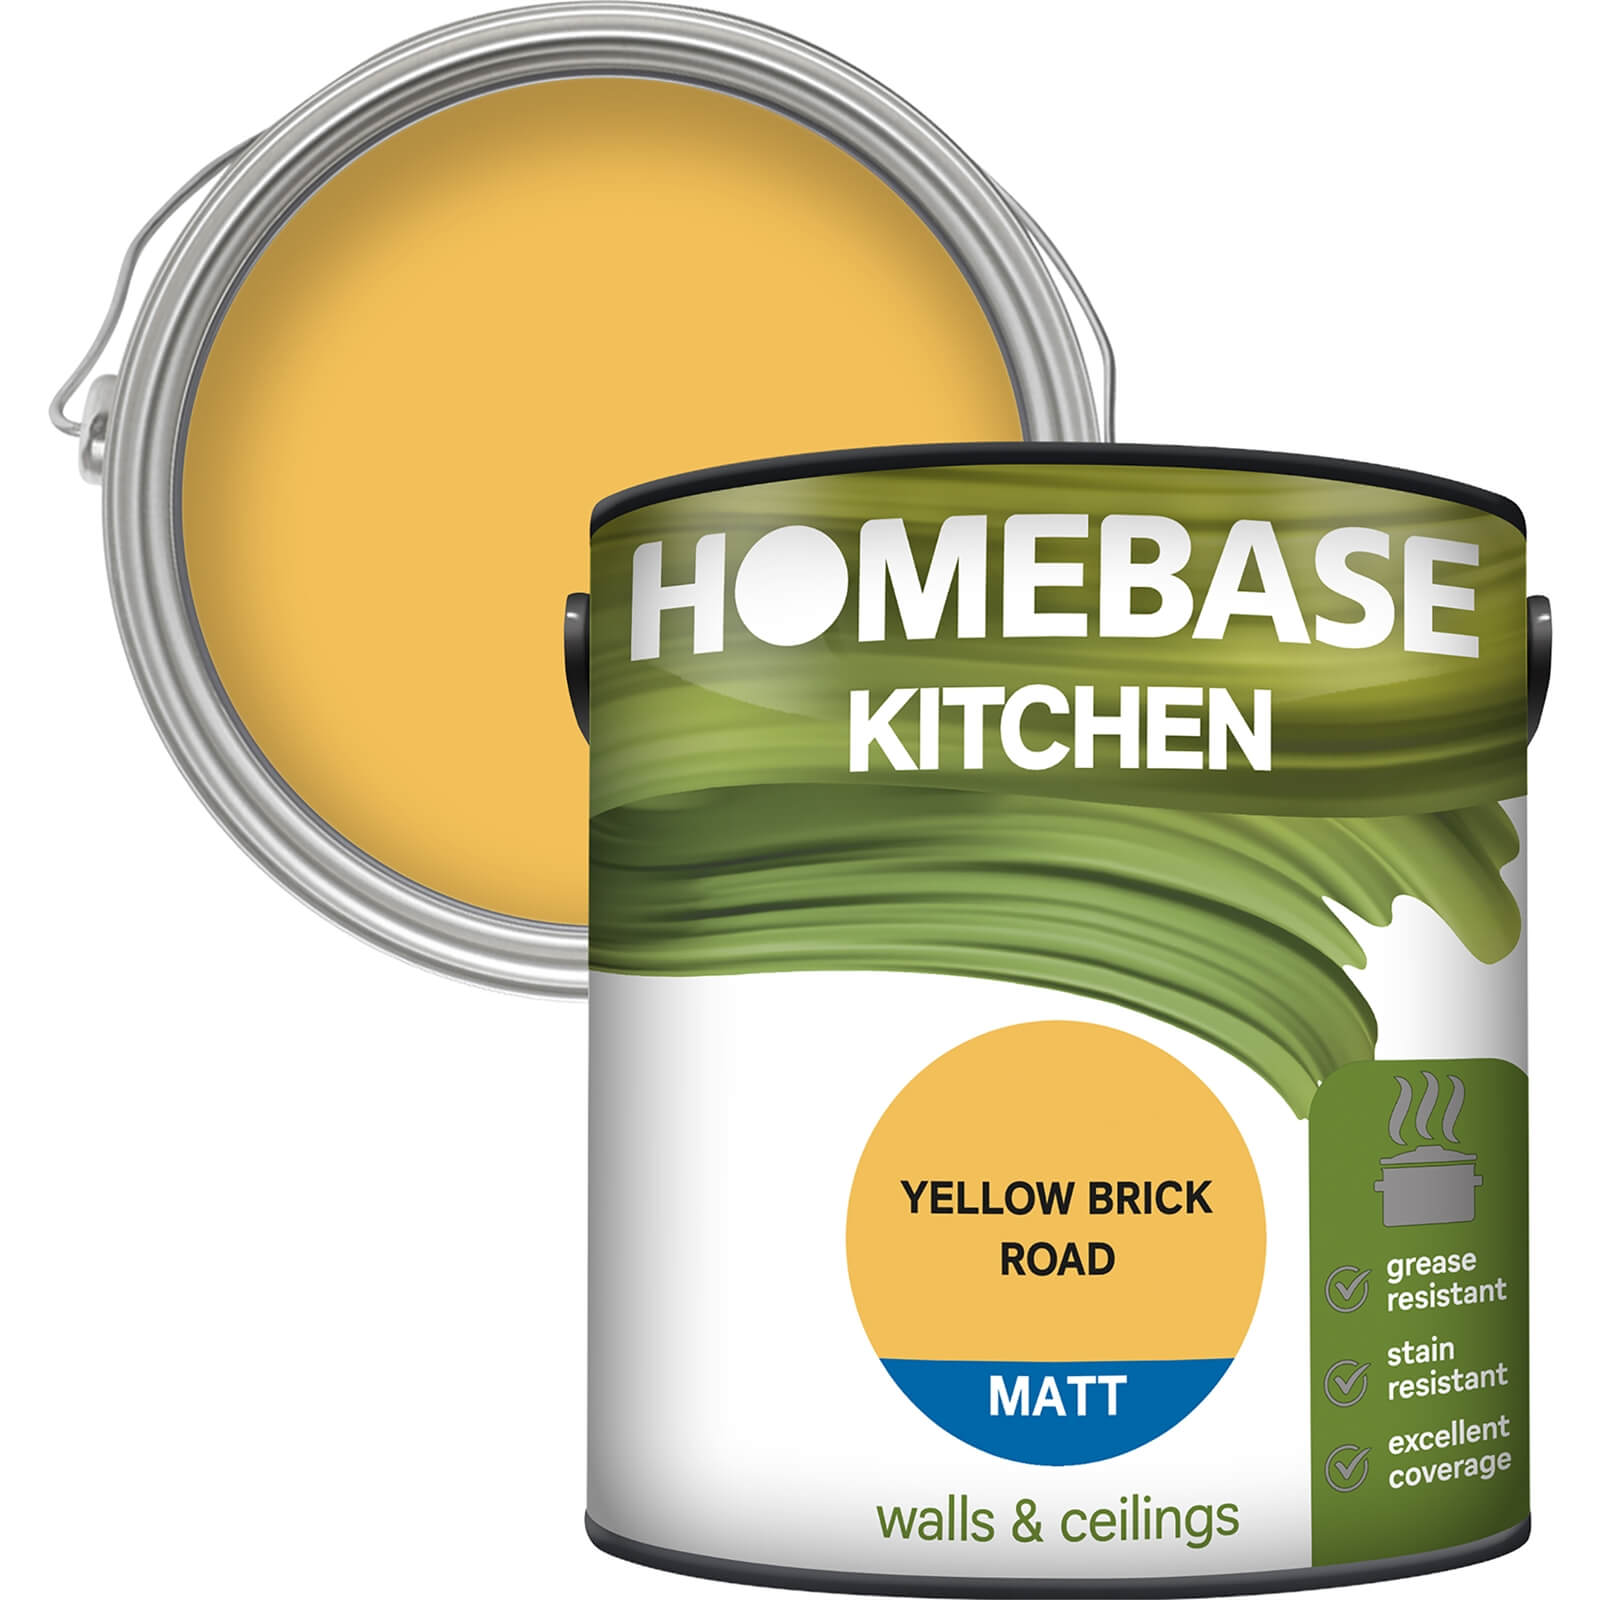 Homebase Kitchen Matt Paint - Yellow Brick Road 2.5L